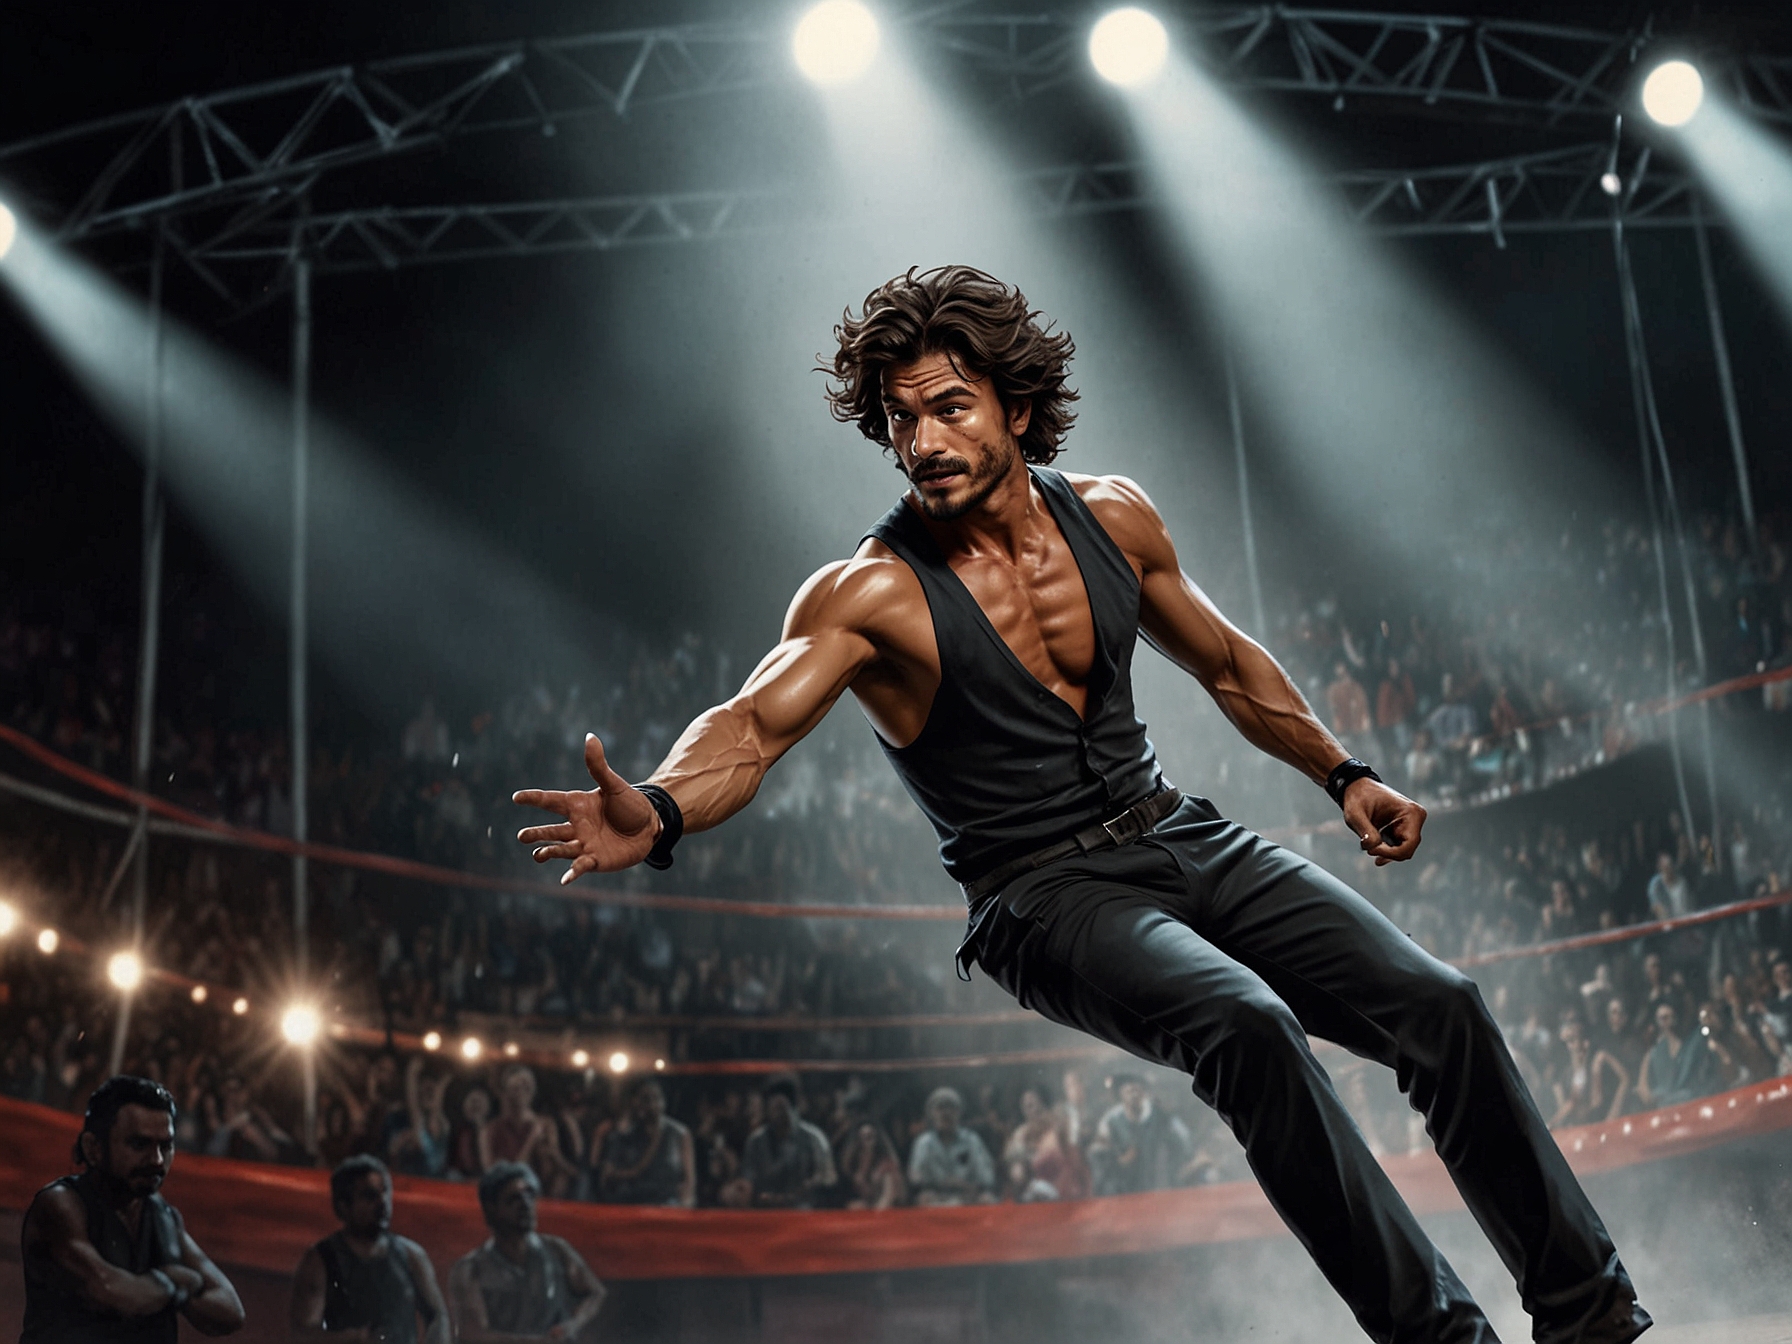 Vidyut Jammwal performing daring stunts in a French circus, showcasing his martial arts skills to international audiences, a remarkable shift from his Bollywood career.